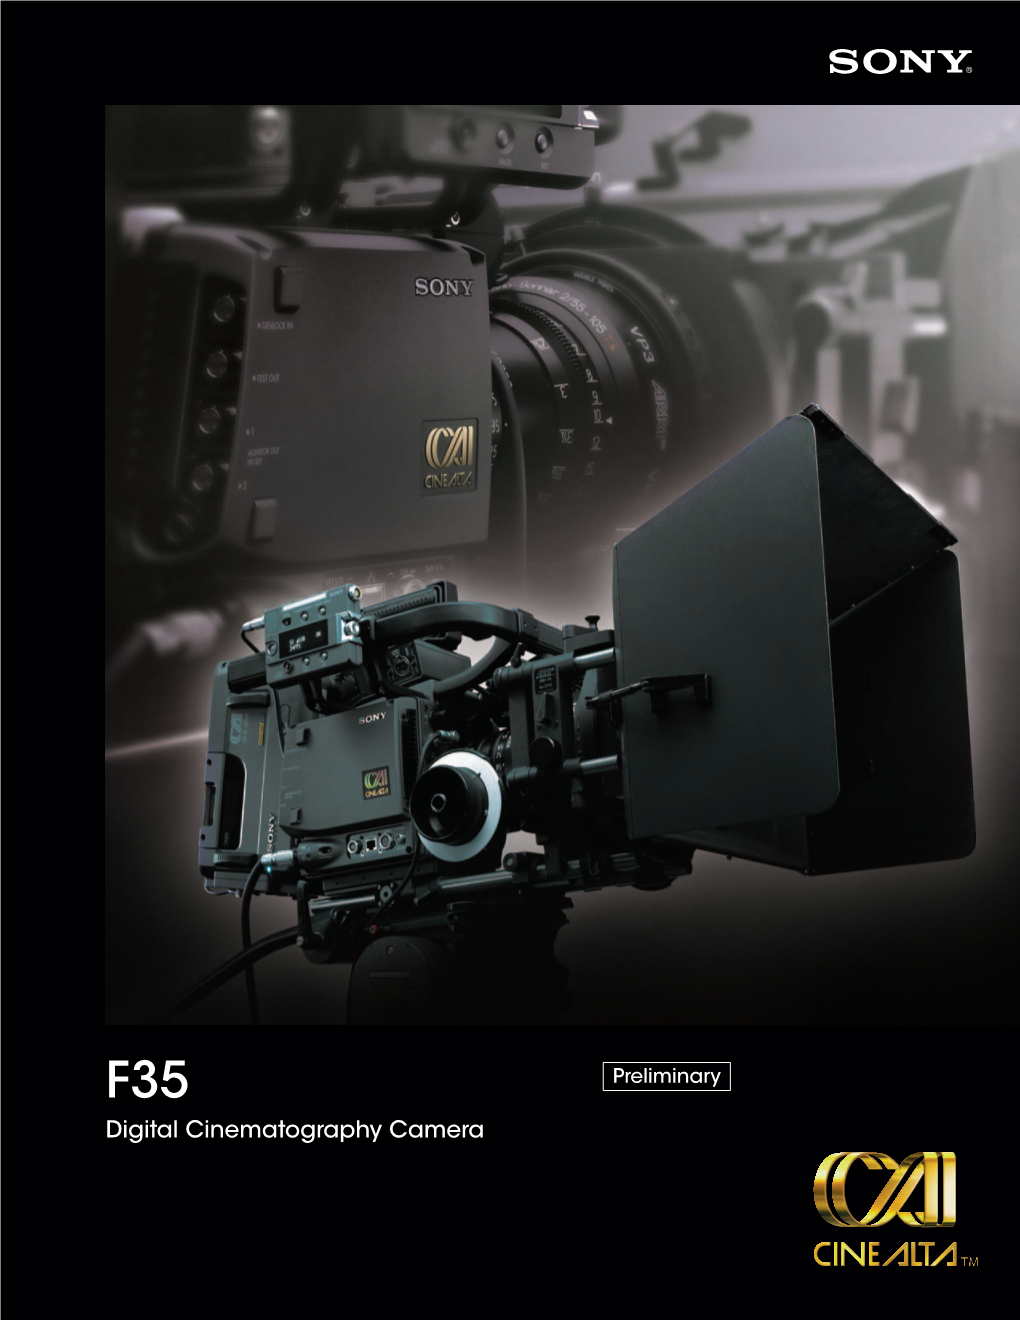 F35 Preliminary Digital Cinematography Camera